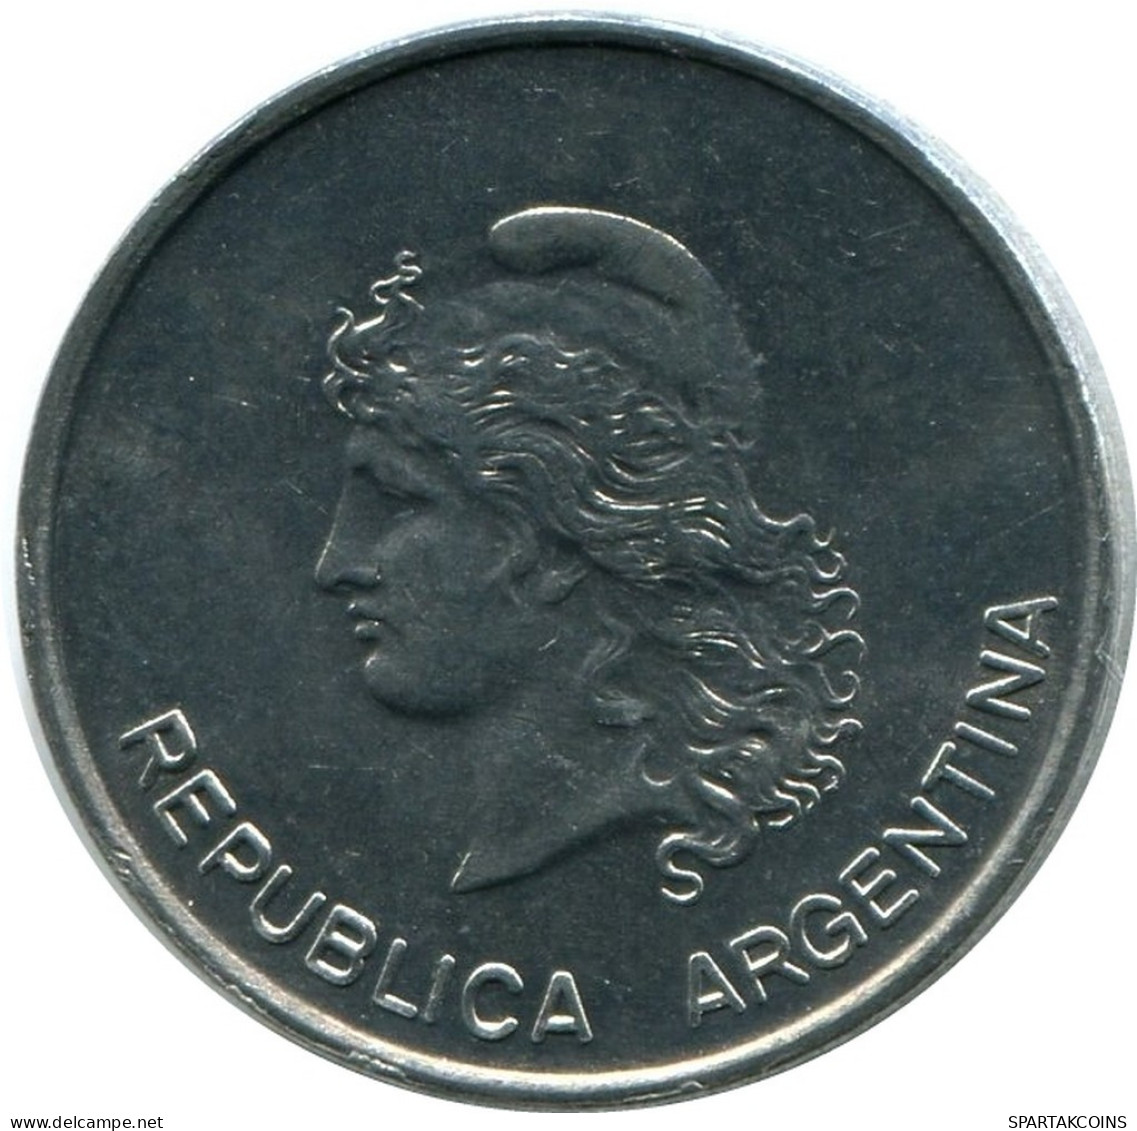 10 CENTAVOS 1983 ARGENTINA Coin UNC #M10337.U.A - Argentina